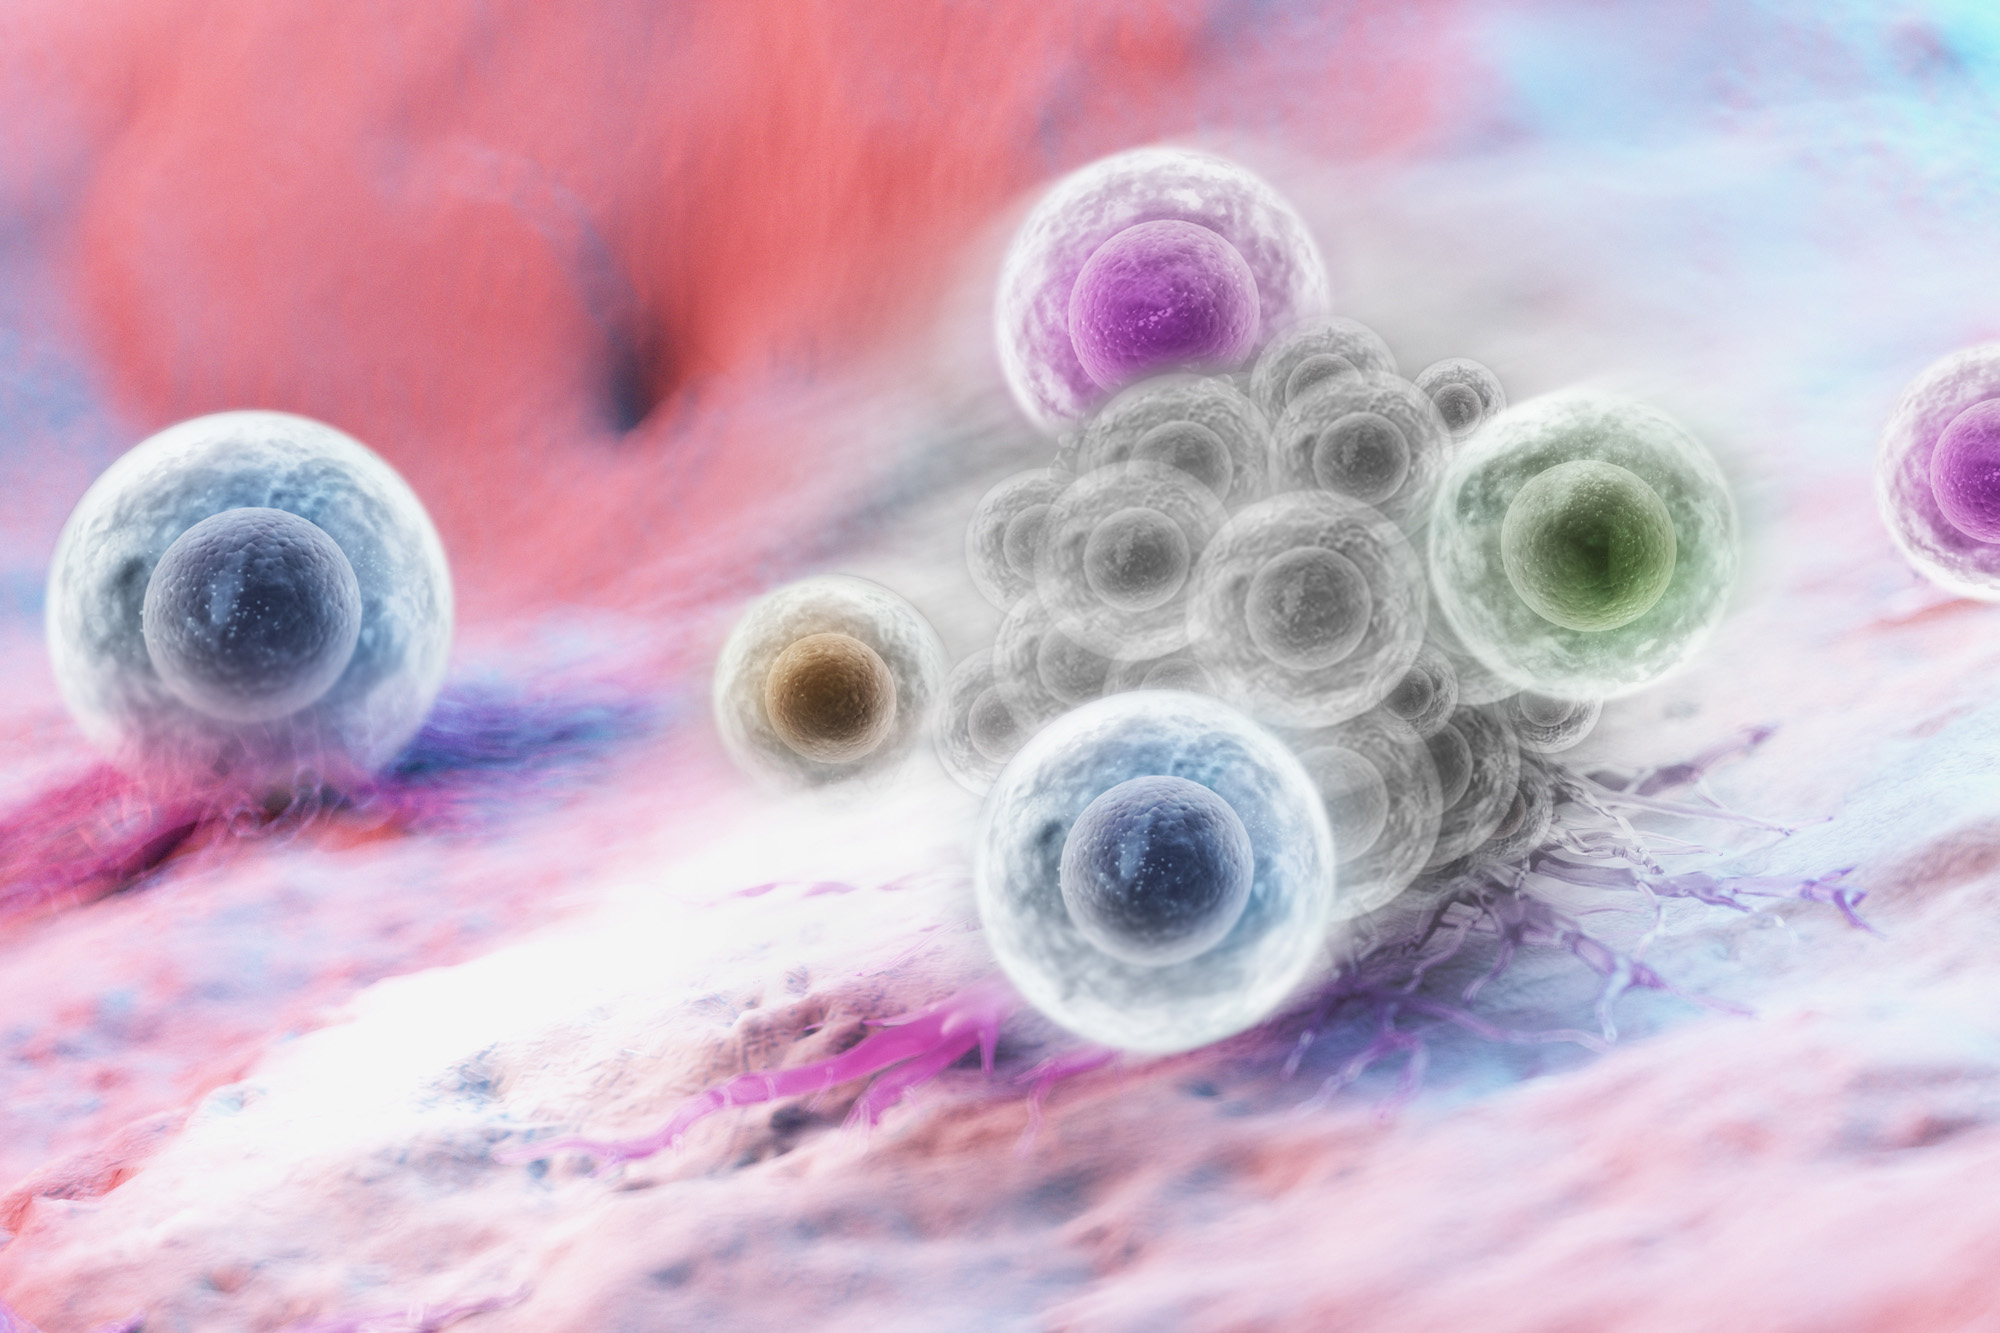 Tumor-infiltrating lymphocytes moving illustrative of TIL infusion